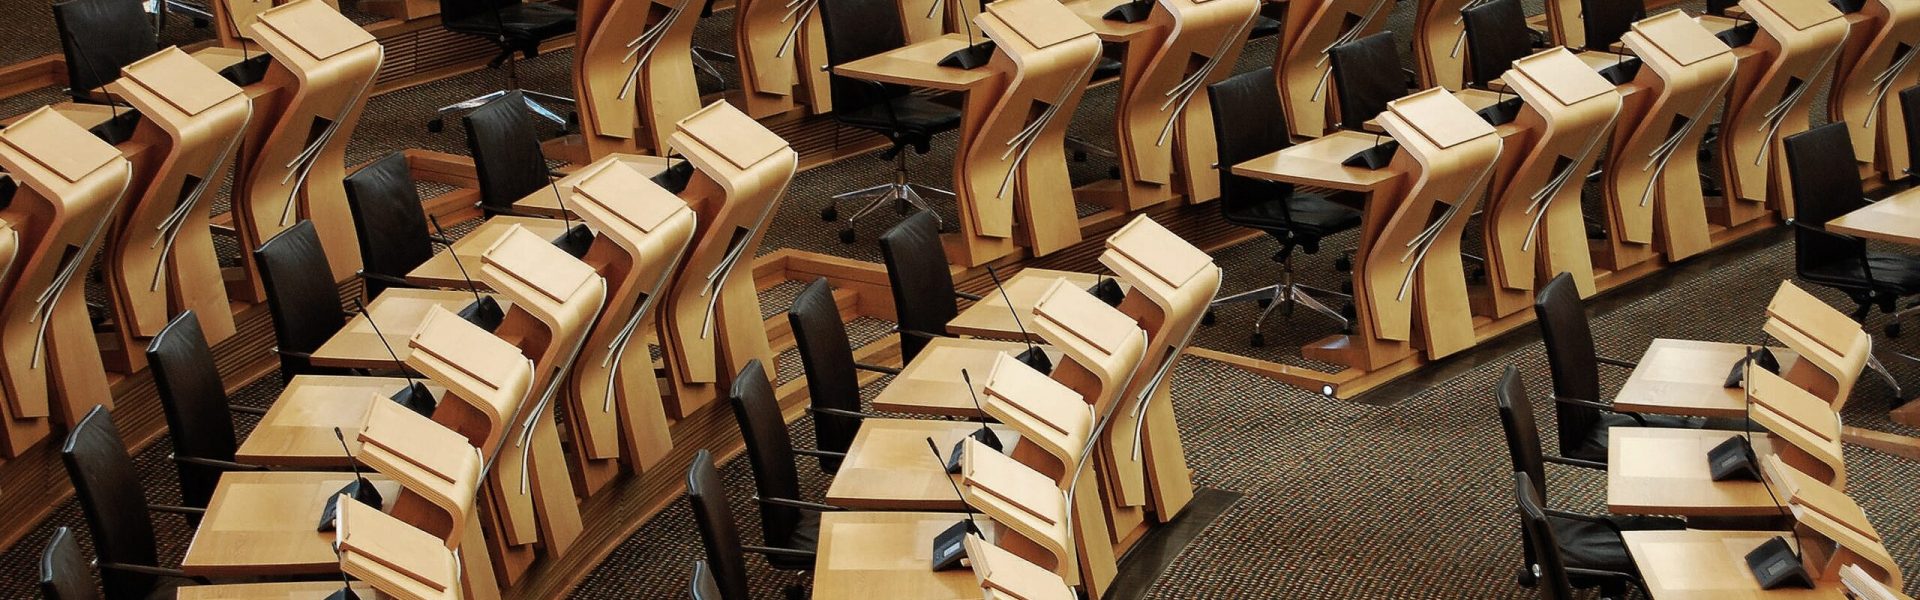 A horizontal shot of the desks inside of the Scottish parliament building